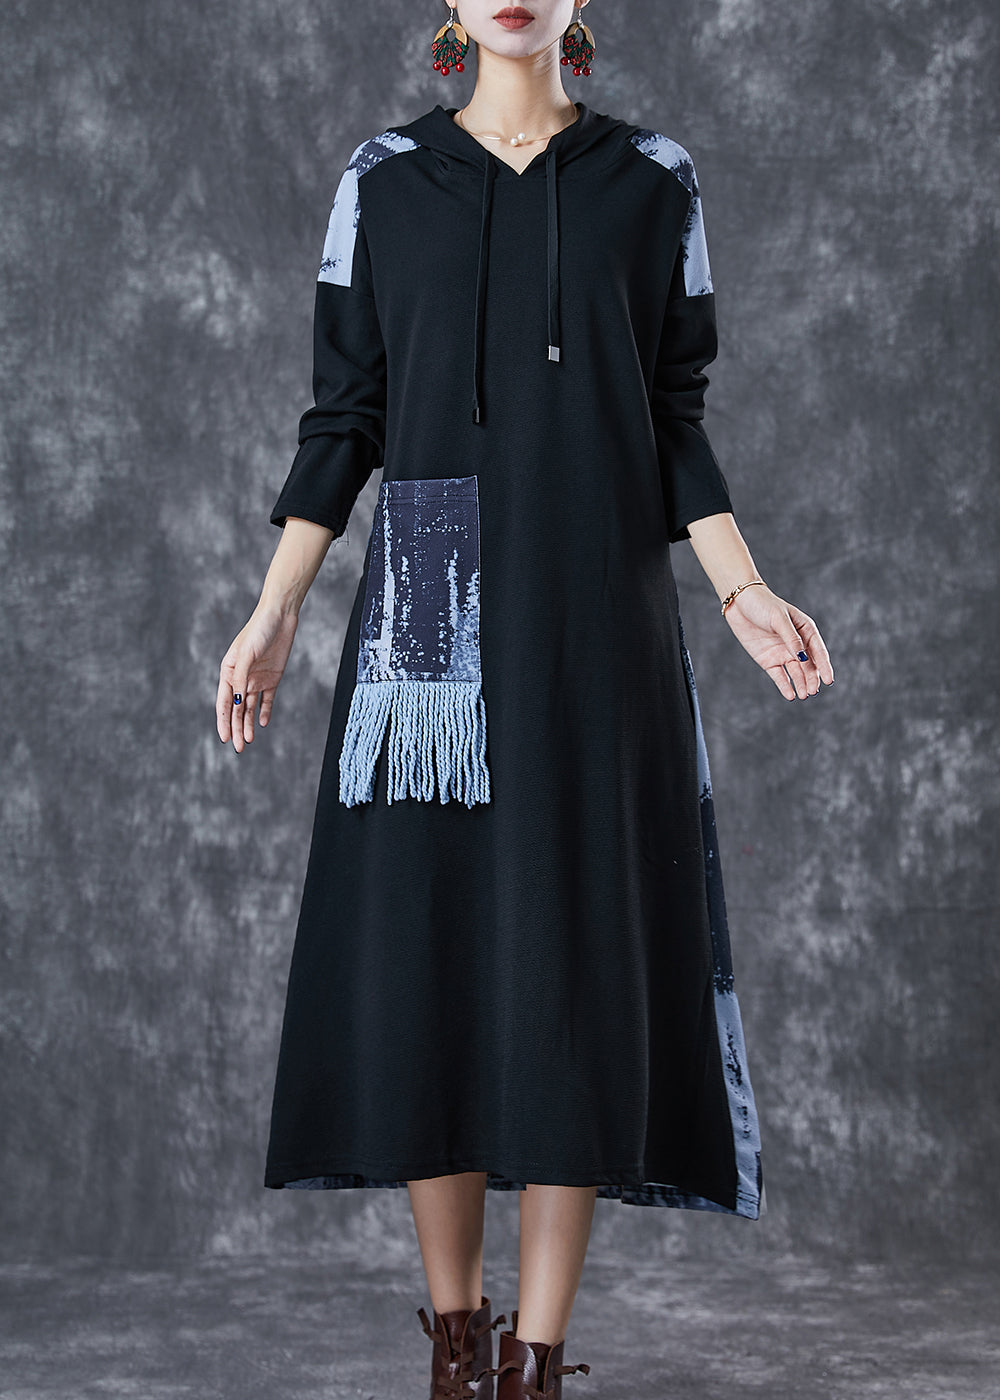 Art Black Tasseled Patchwork Tie Dye Cotton Loose Sweatshirt Dress Fall